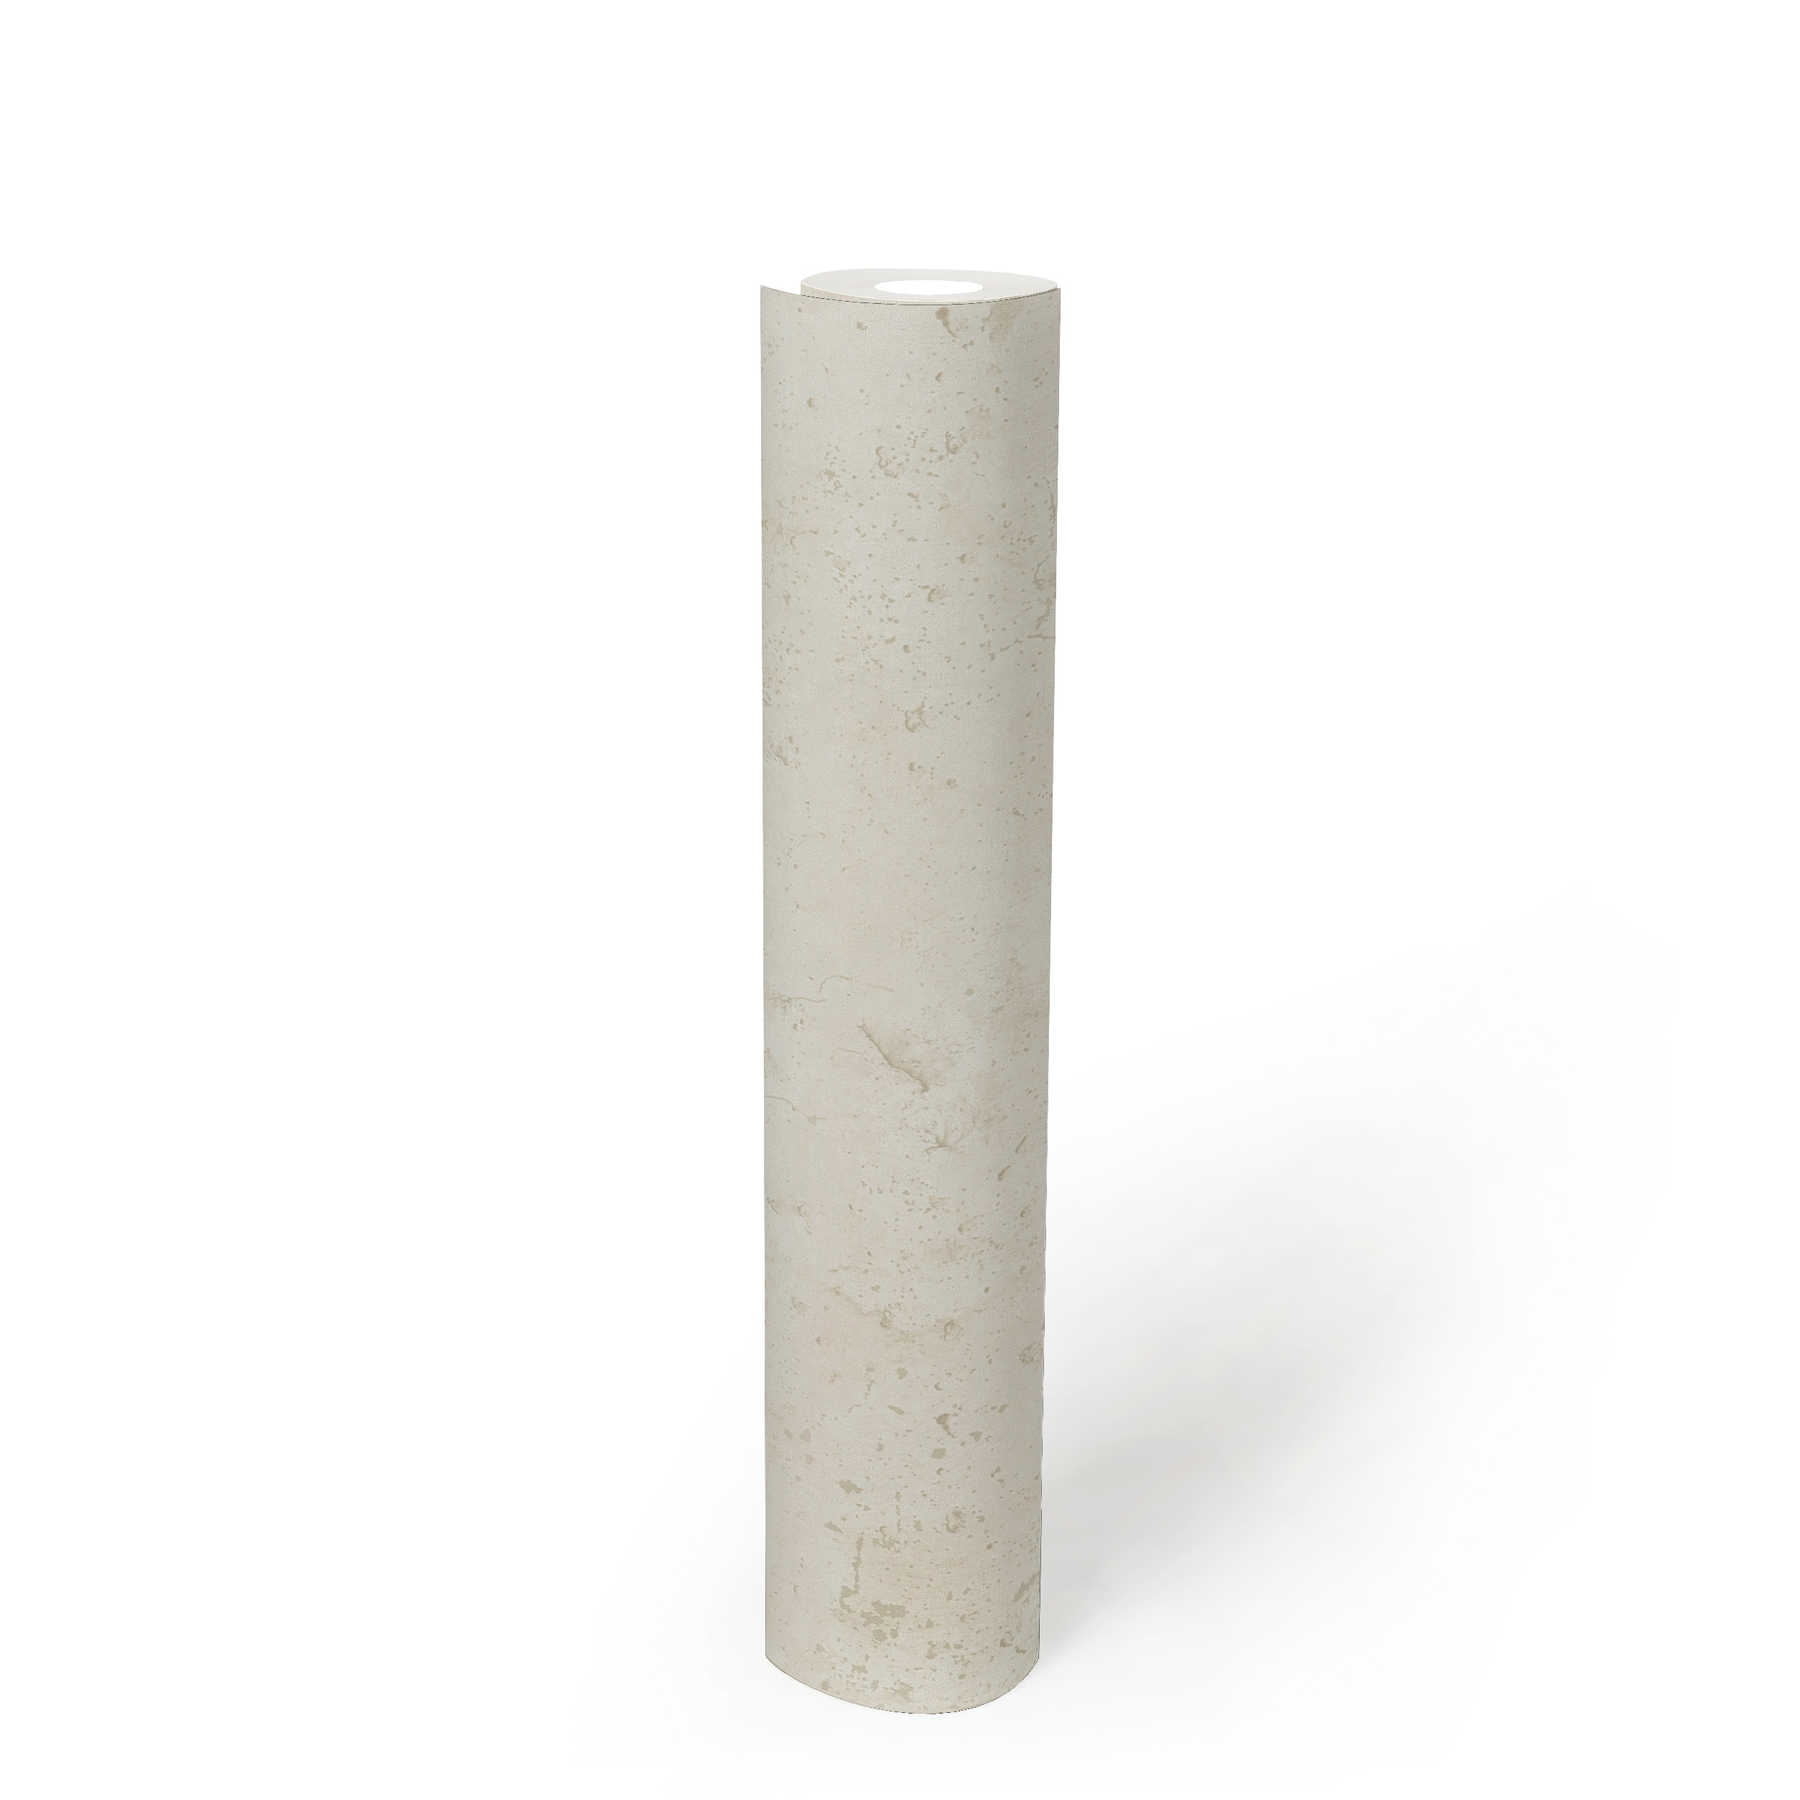             Concrete wallpaper in industrial style - cream, white
        